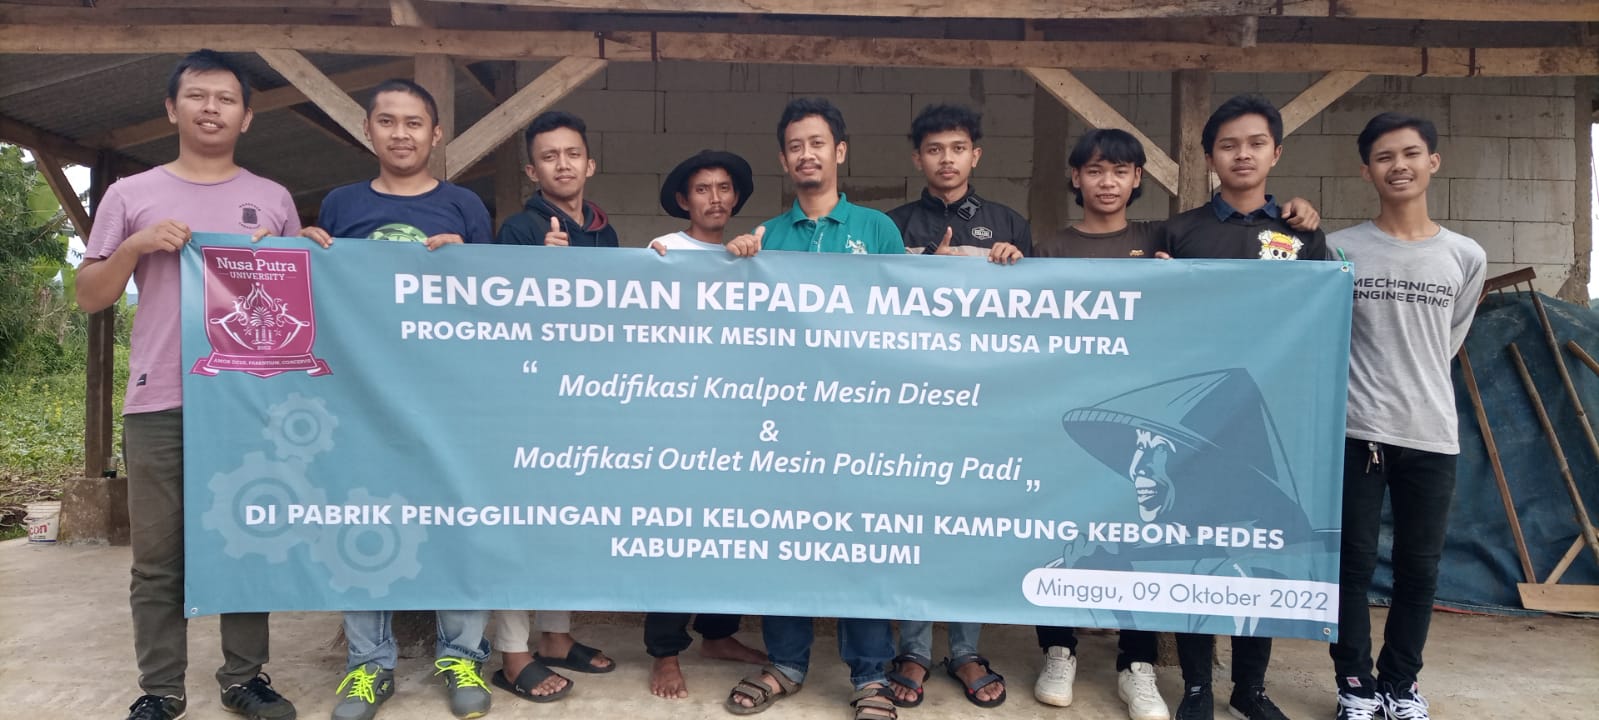 Dosen dan mahasiswa Teknik Mesin Universitas Nusa Putra